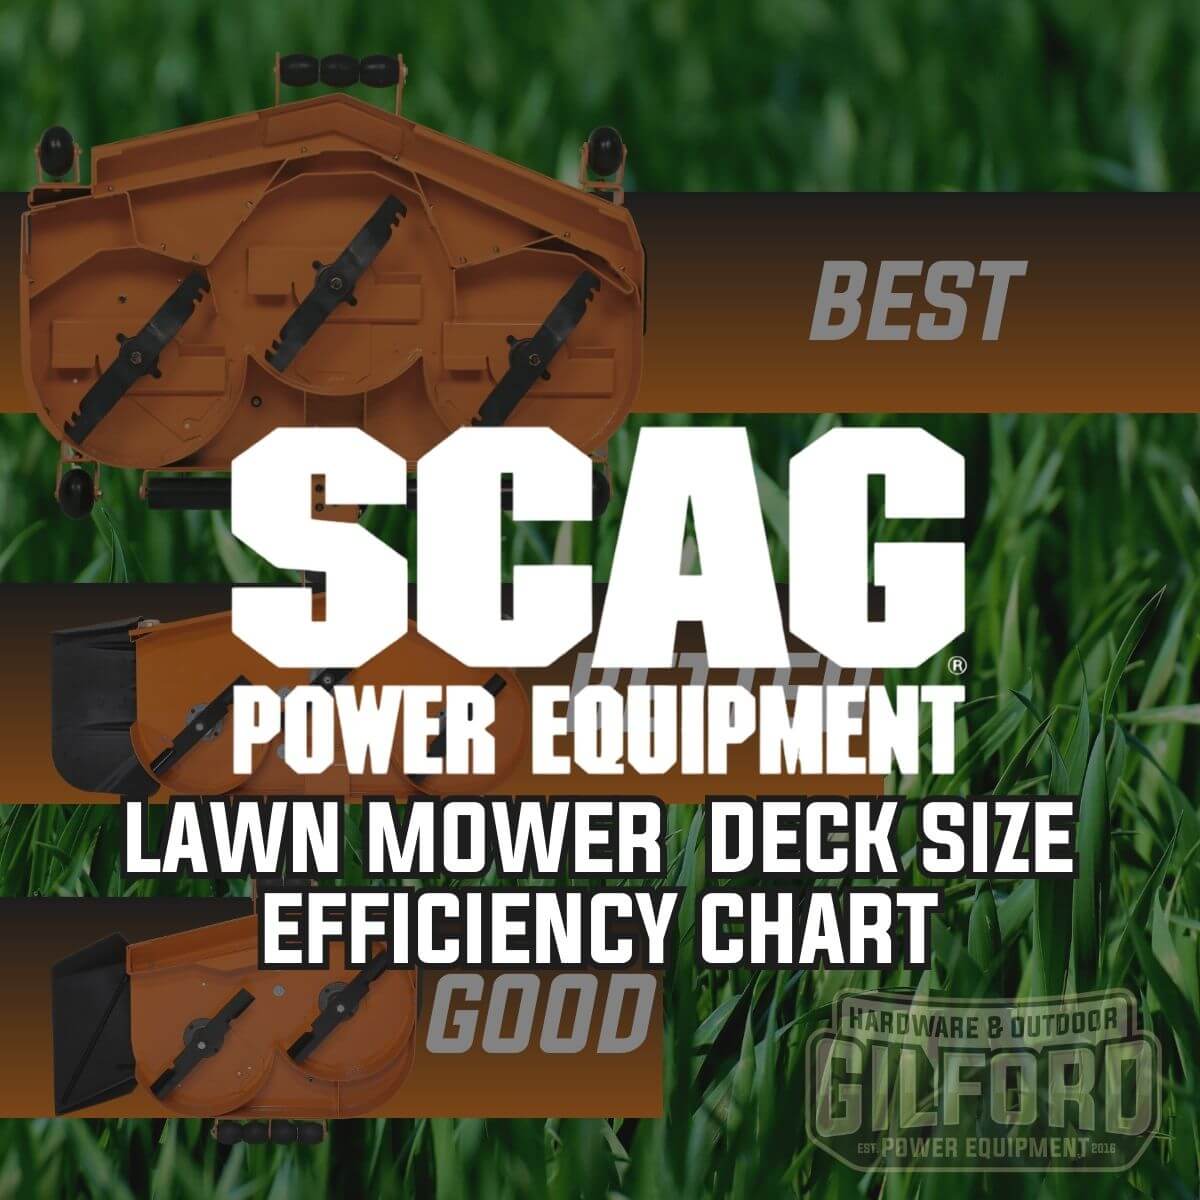 Scag Lawn Mower Deck Size Efficiency Chart